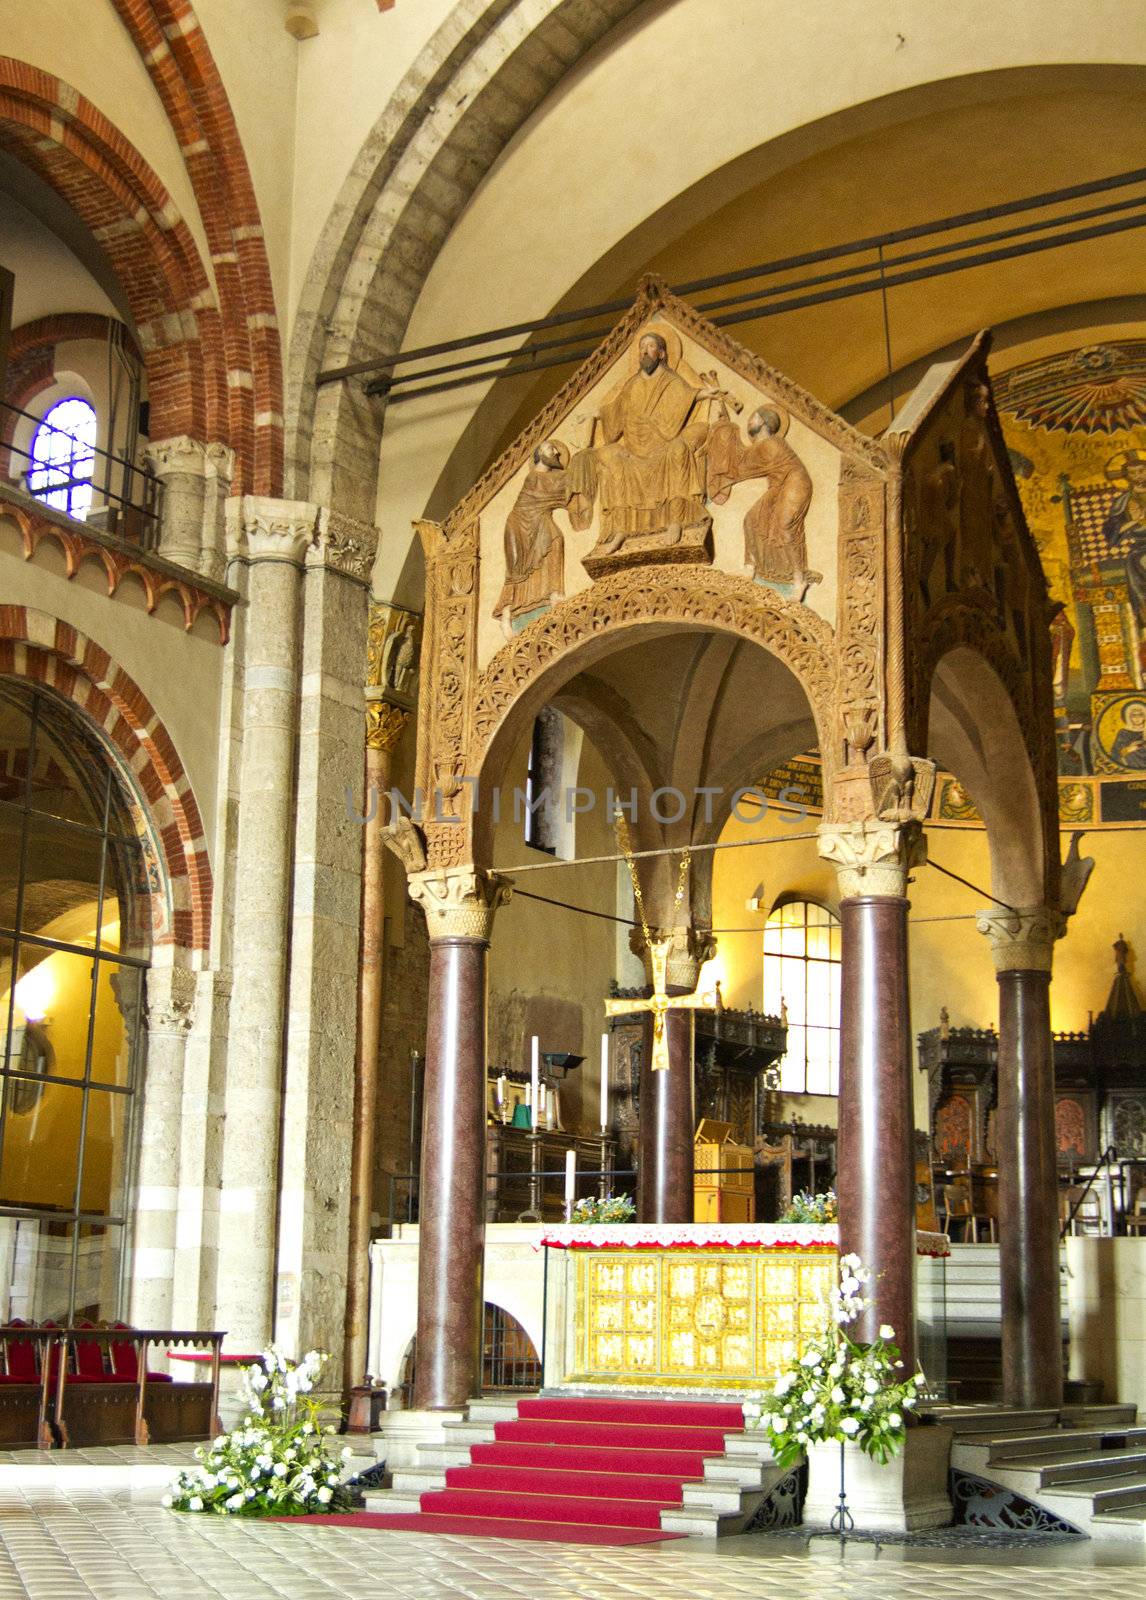 Ciborium with golden altar in the Basilica of St. Ambrogio in Milan, Italy (386 AD)